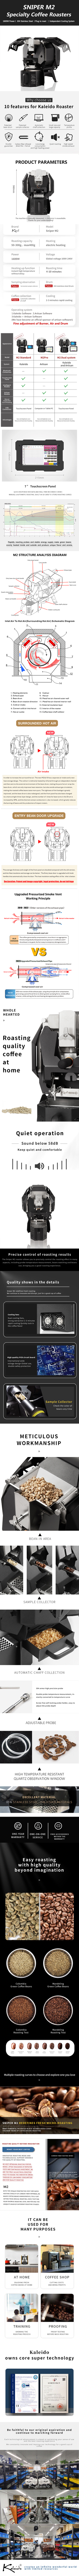 intelligent coffee roaster